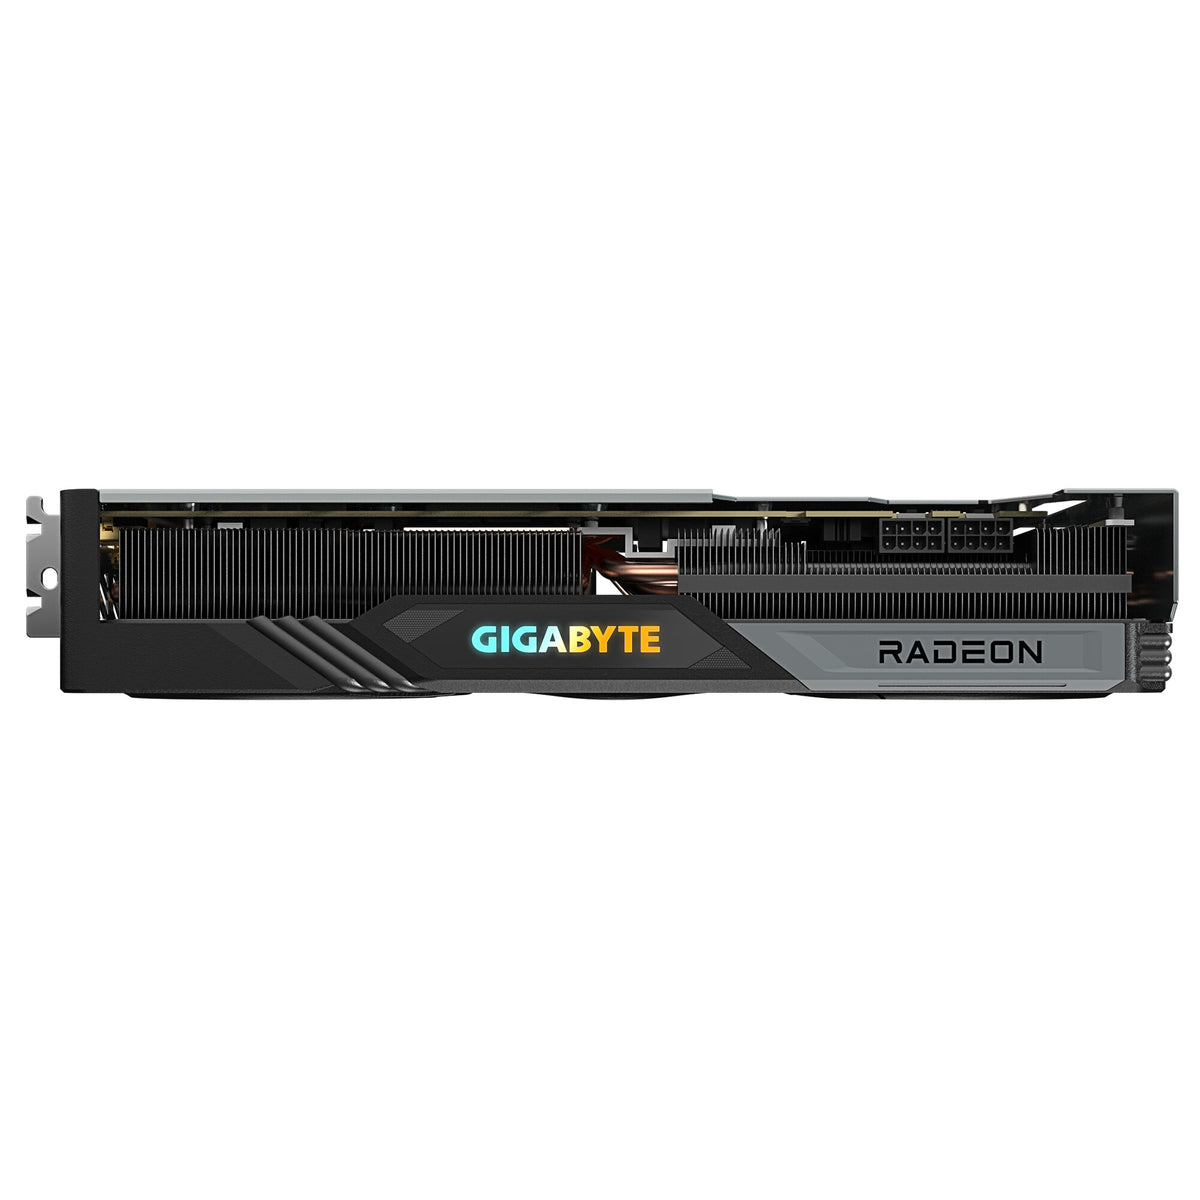 Gigabyte GAMING - AMD 16 GB GDDR6 Radeon RX 7900 GRE graphics card